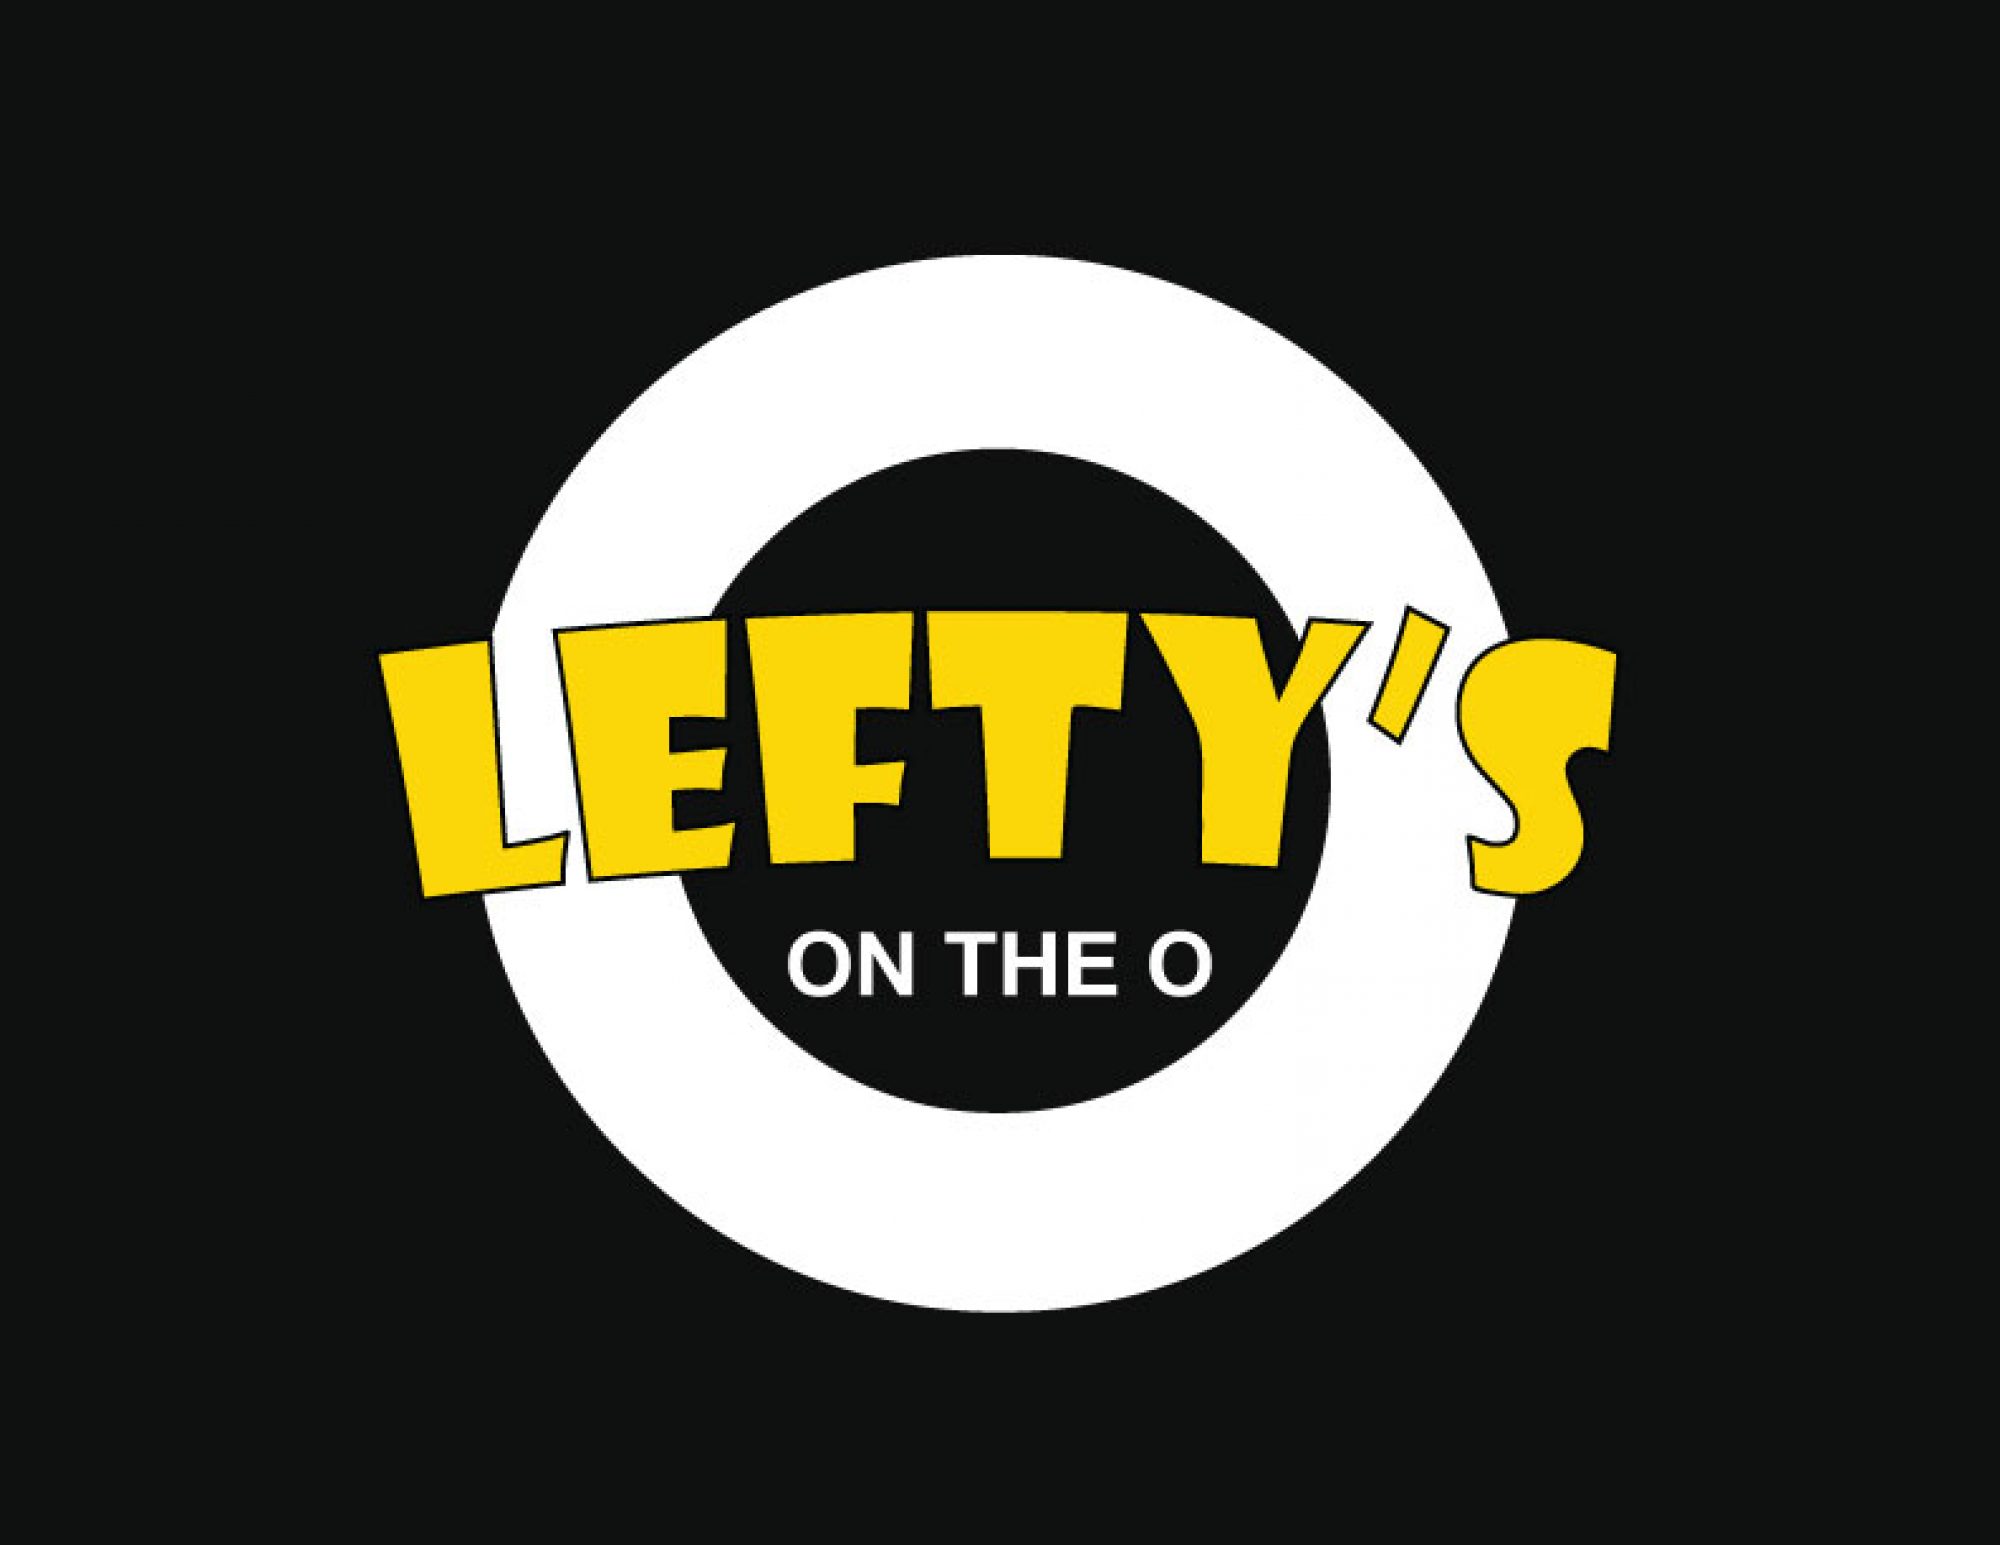 Leftys on the o